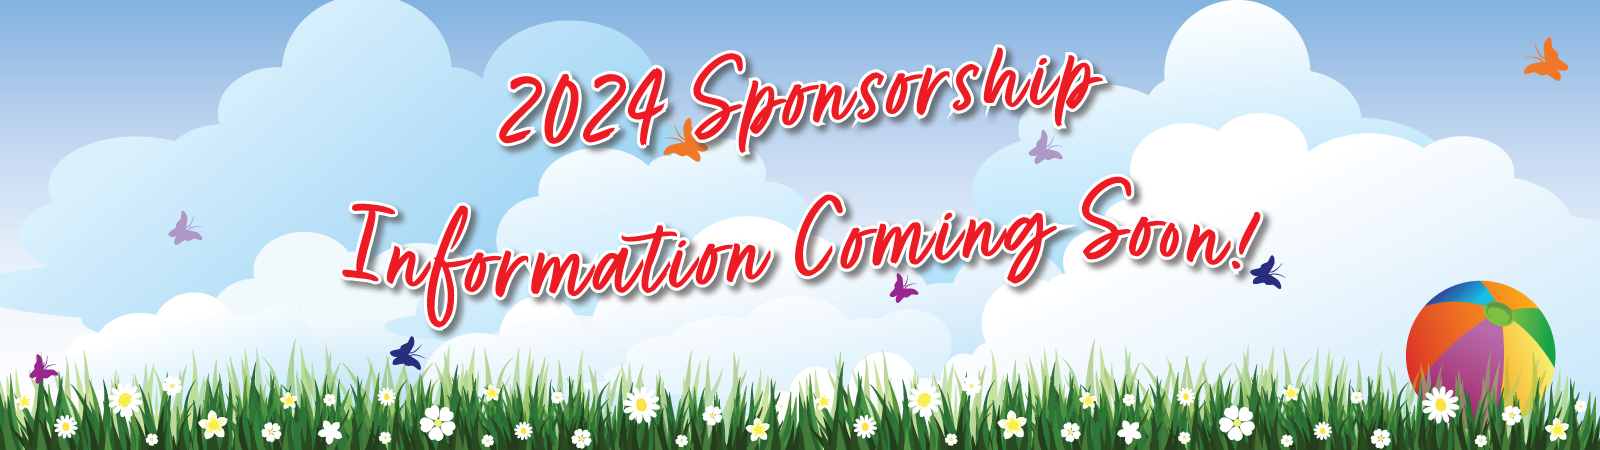 2024 Sponsorships